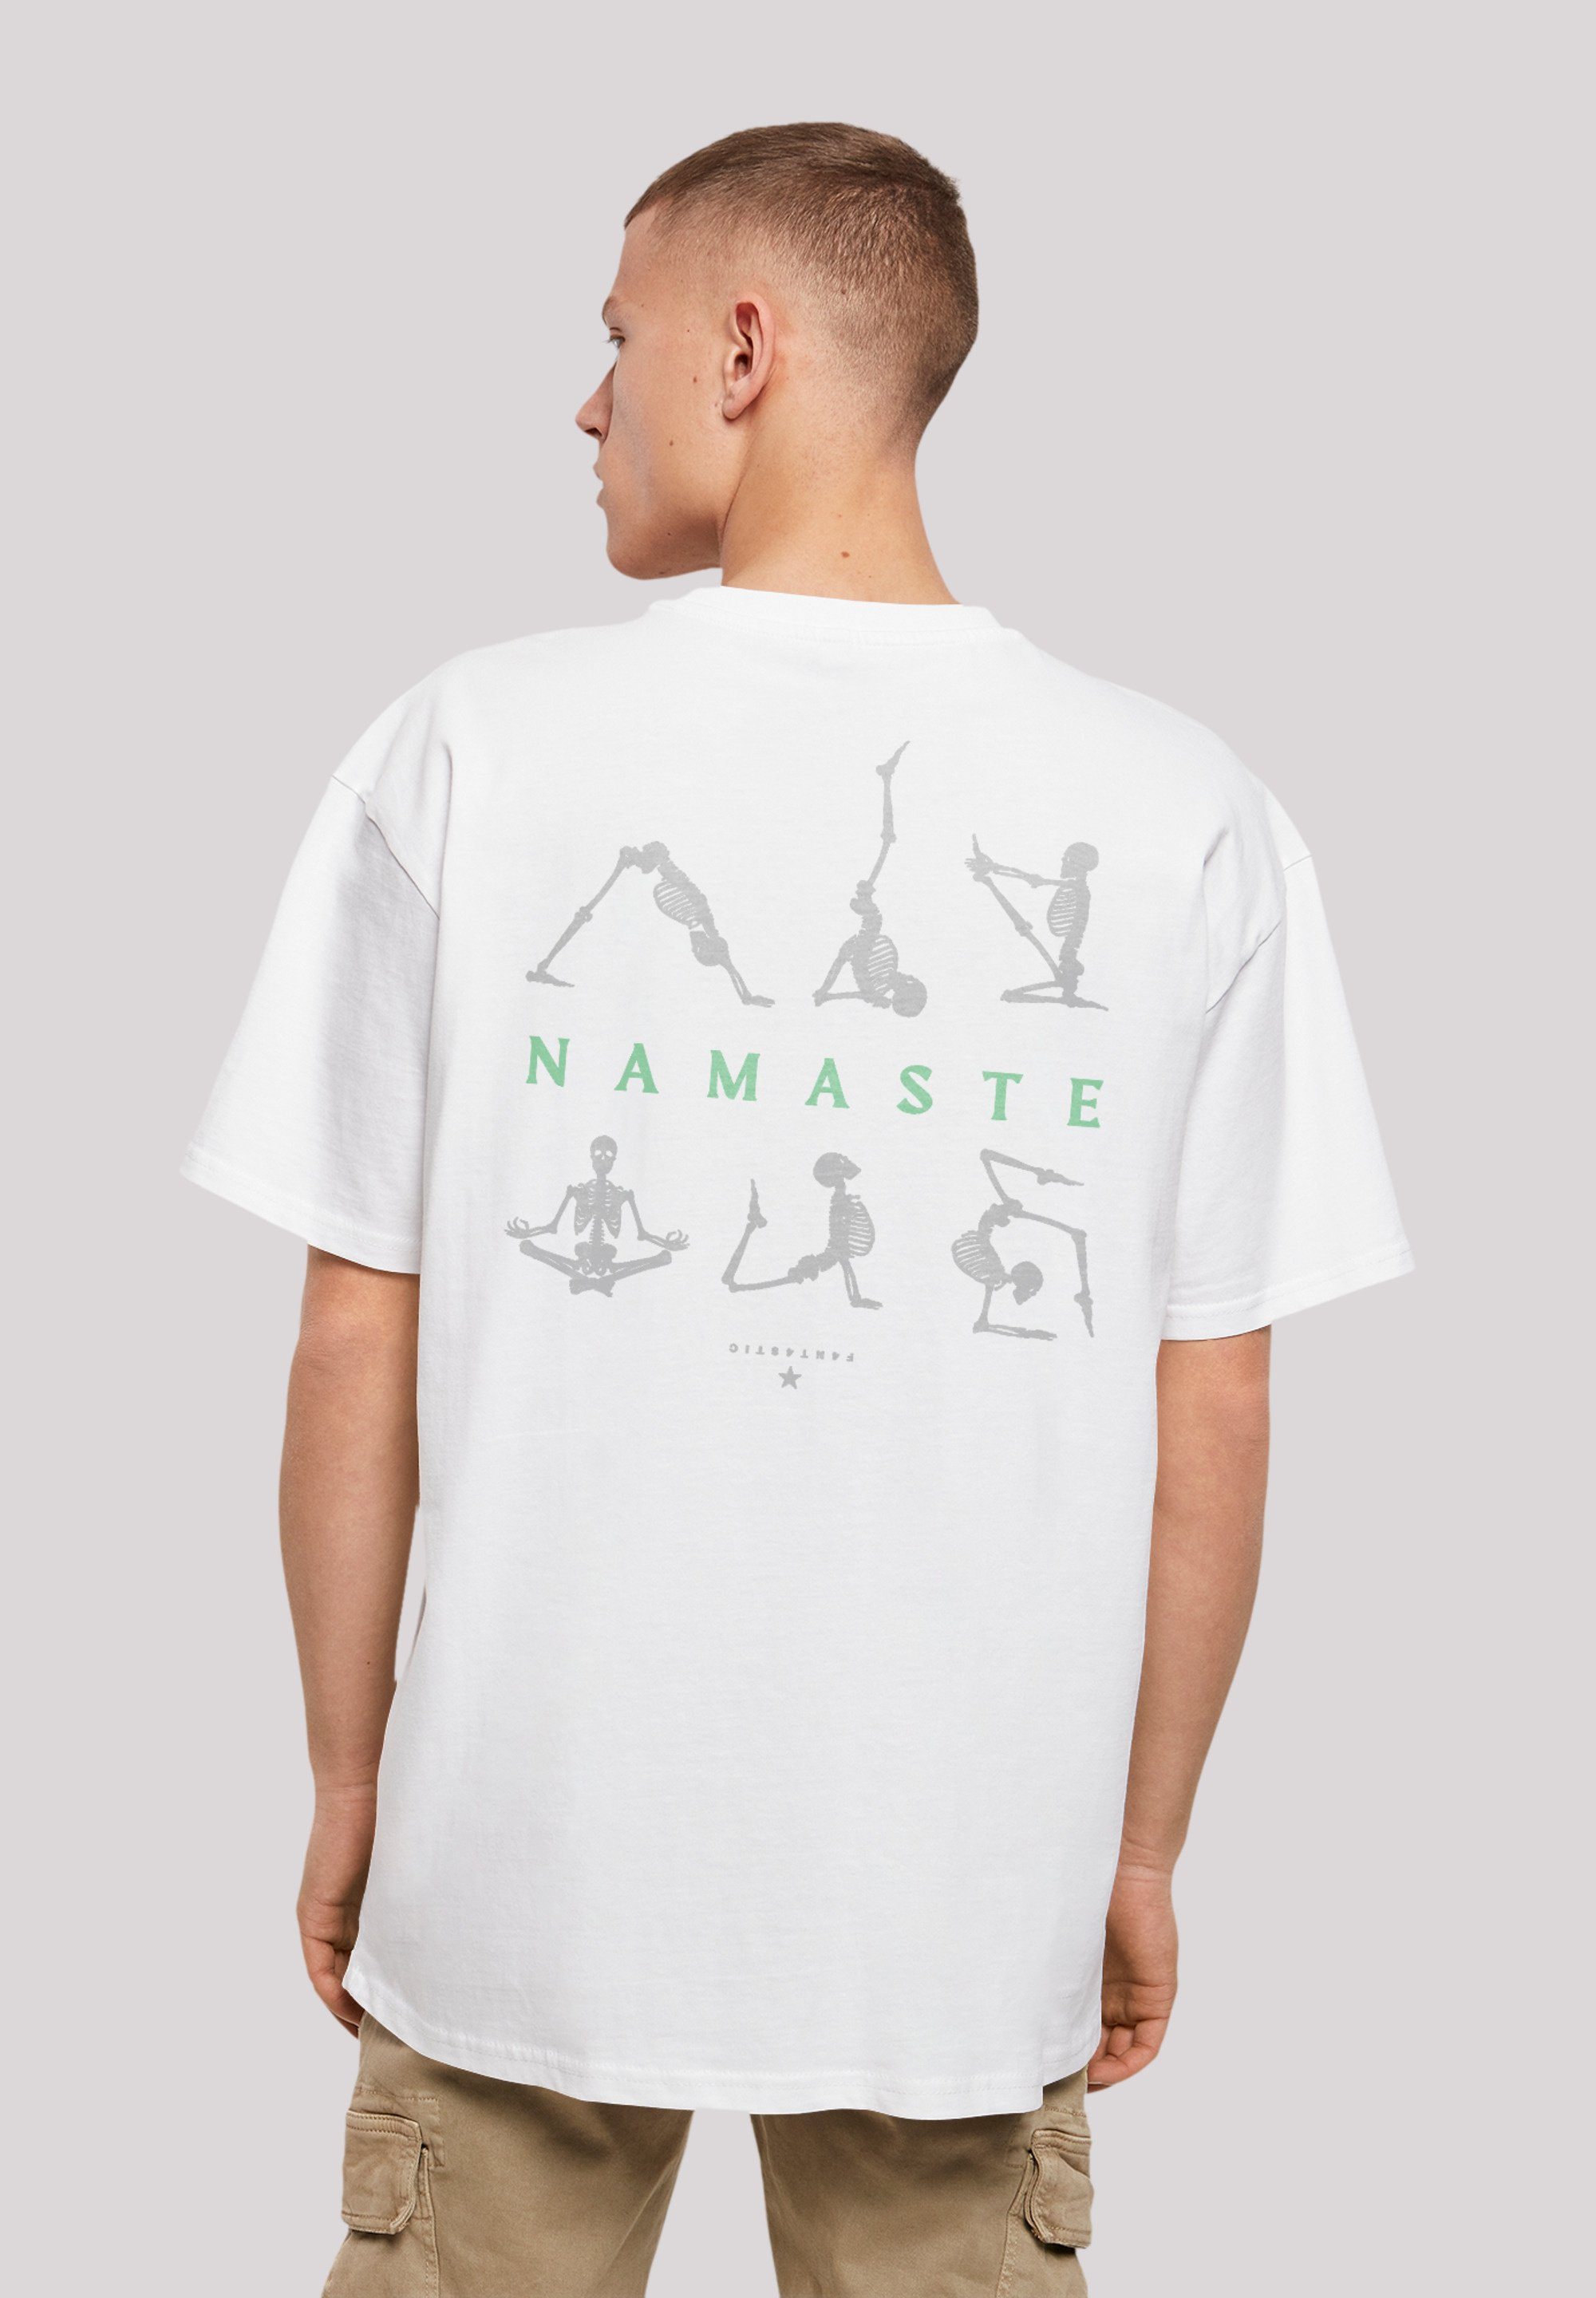 F4NT4STIC T-Shirt Namaste Yoga Halloween weiß Print Skelett